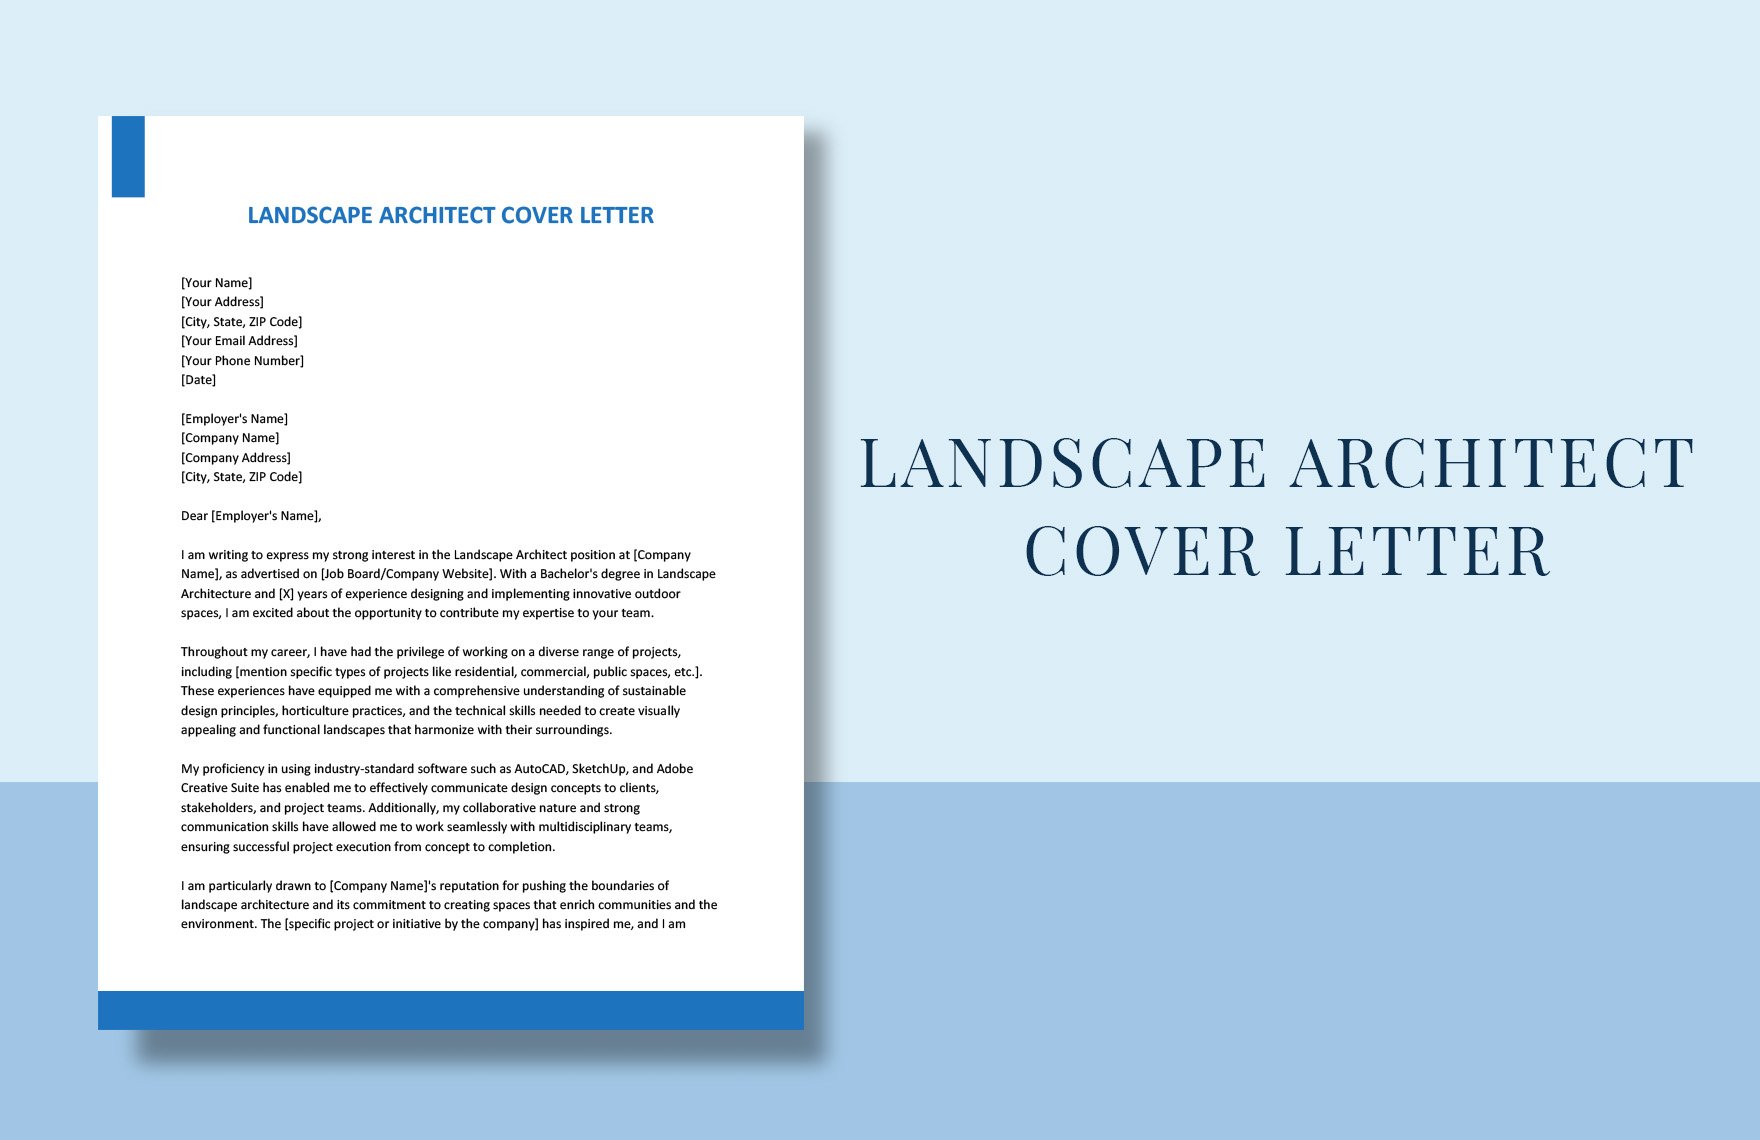 Landscape Architect Cover Letter in Word, Google Docs